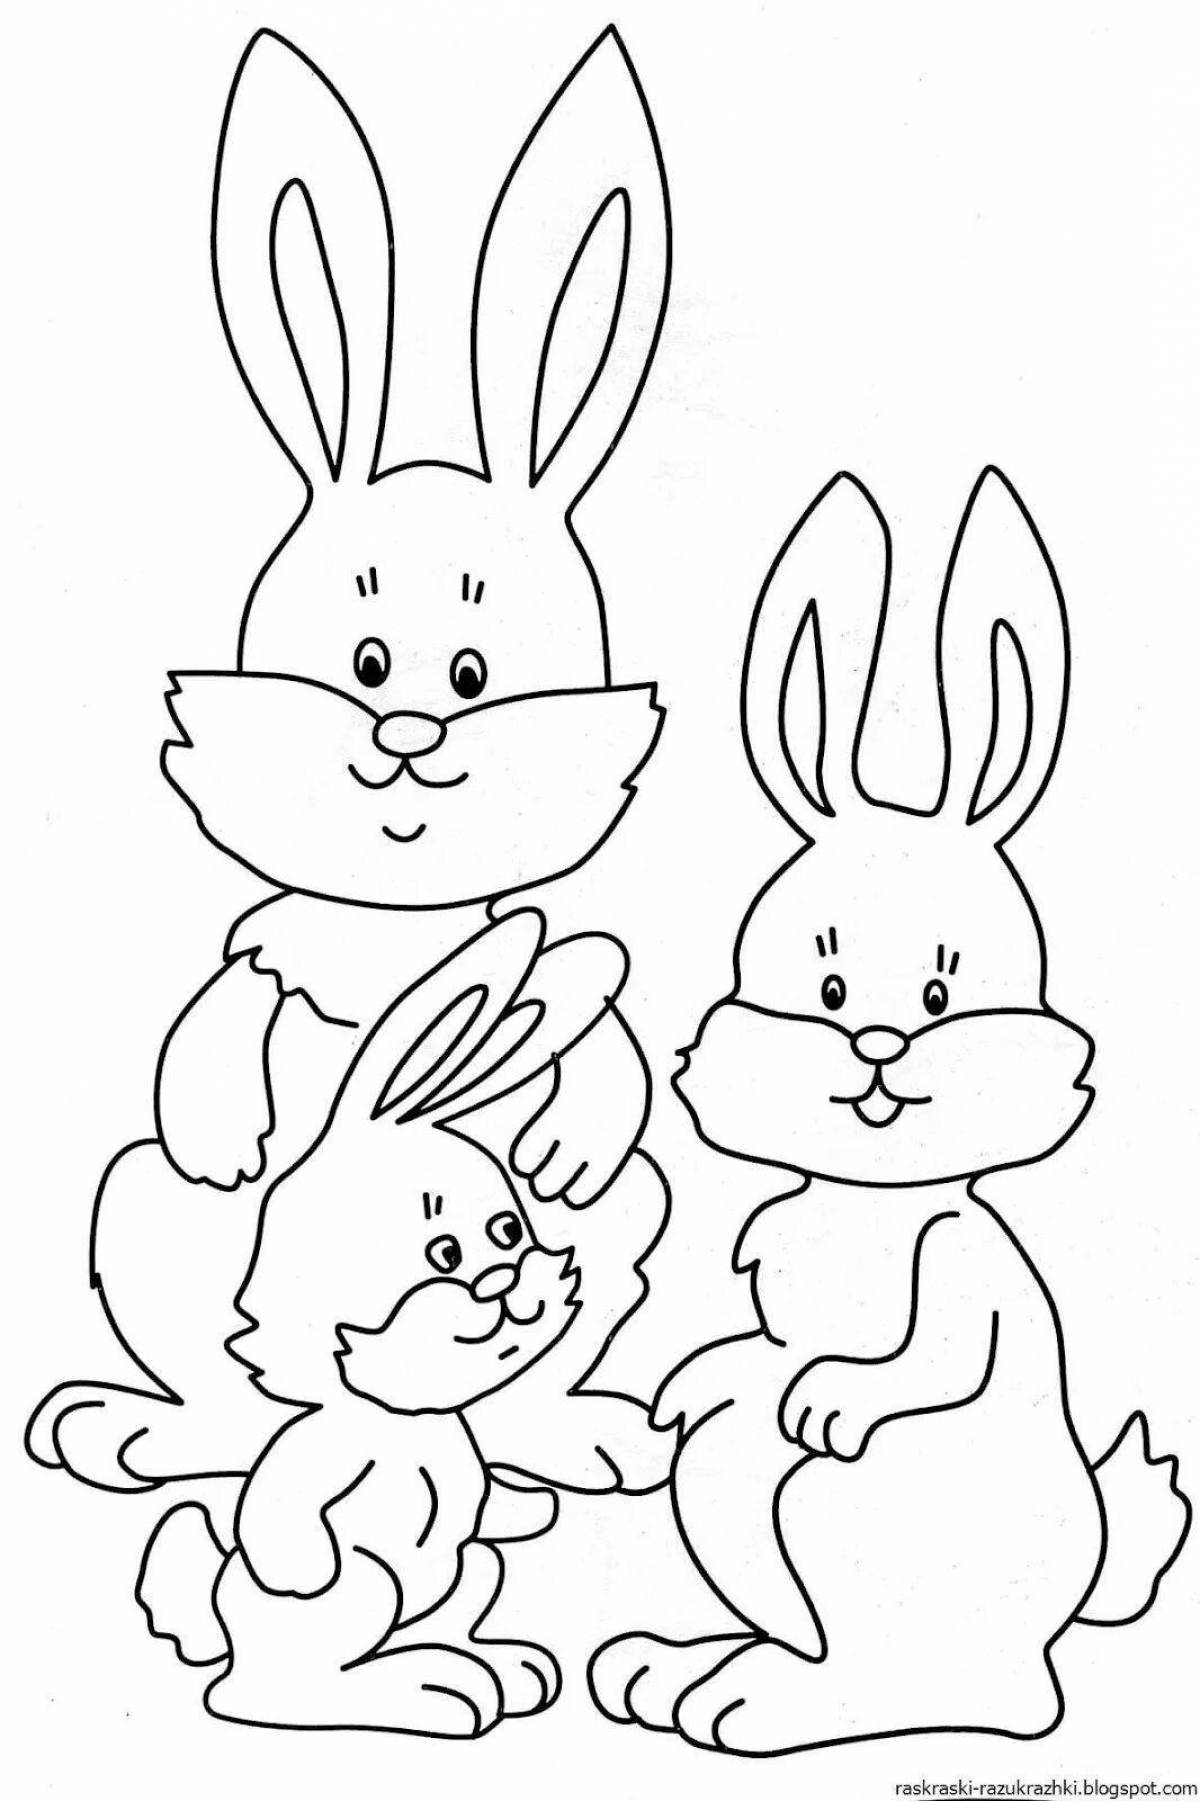 Cute rabbit coloring book for kids 3 4